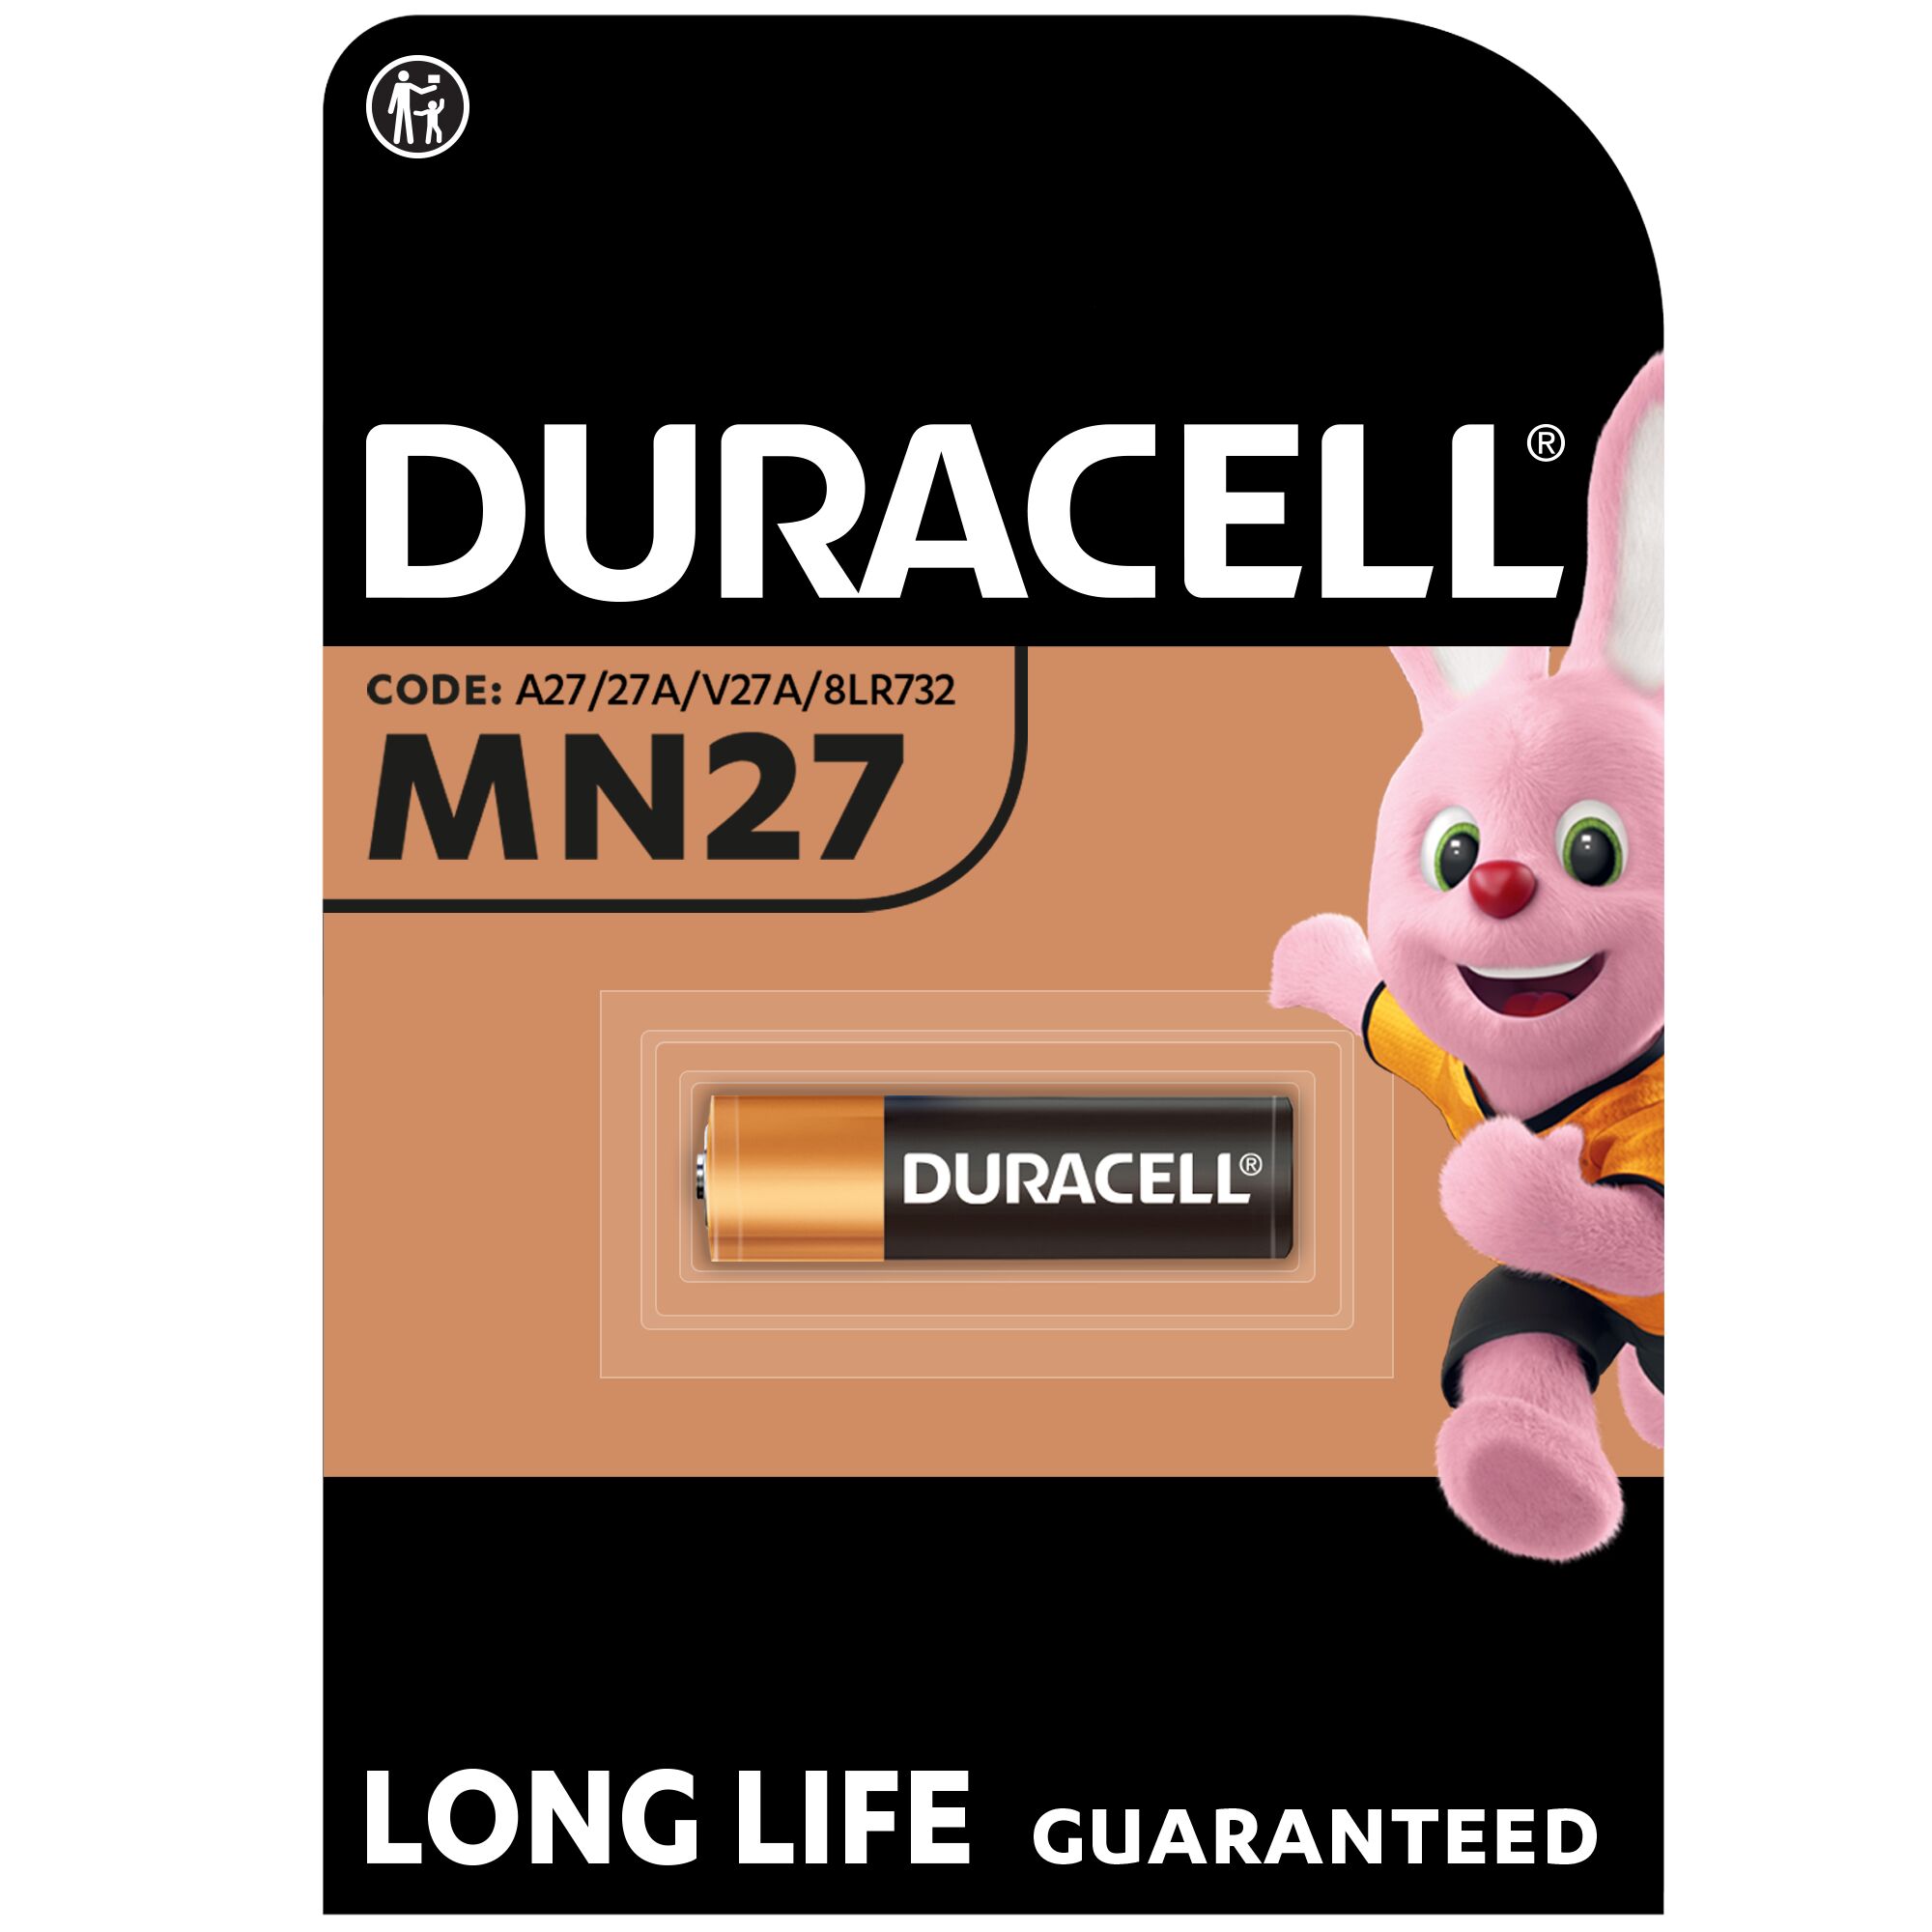 Специализированная щелочная батарейка Duracell 12V MN27 A27/27A/V27A/8LR732 (706029) - фото 1